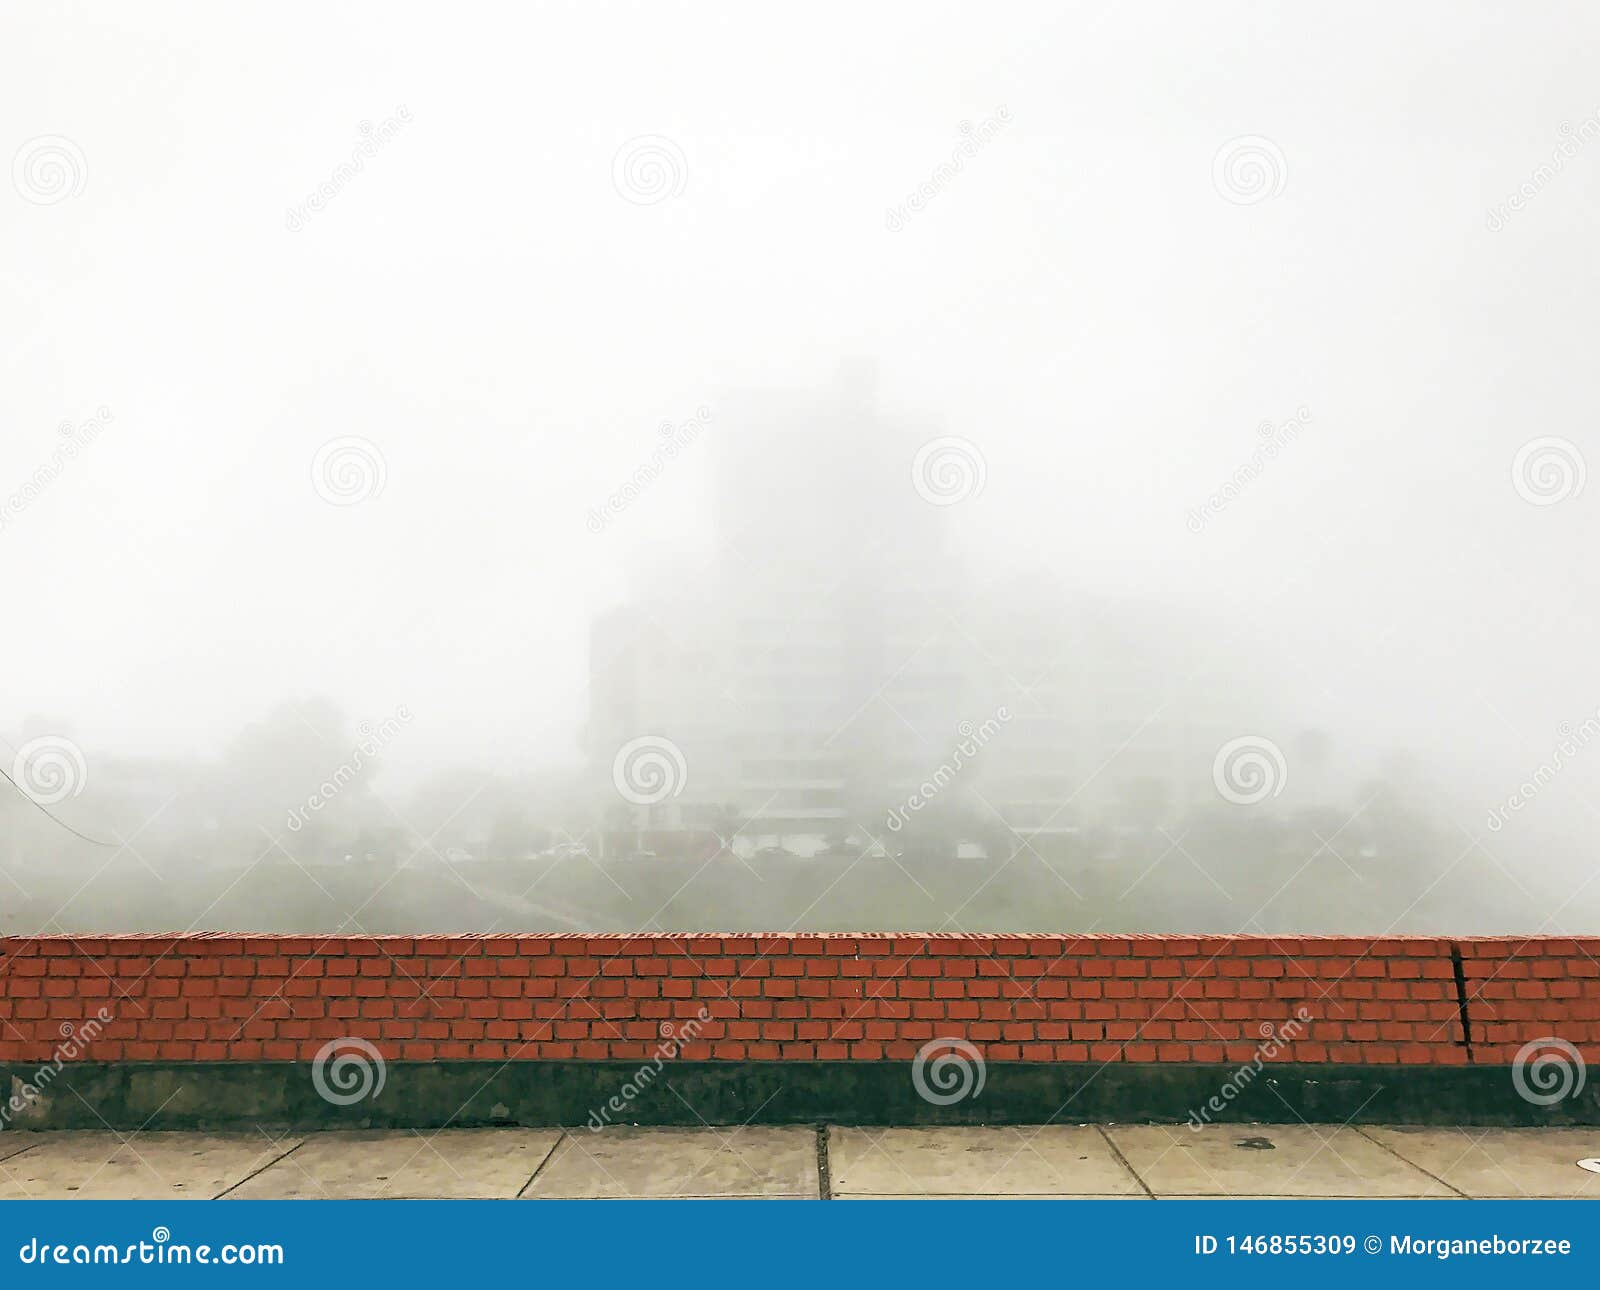 foggy day in bajada armendariz, a winter morning with intense fog in miraflores